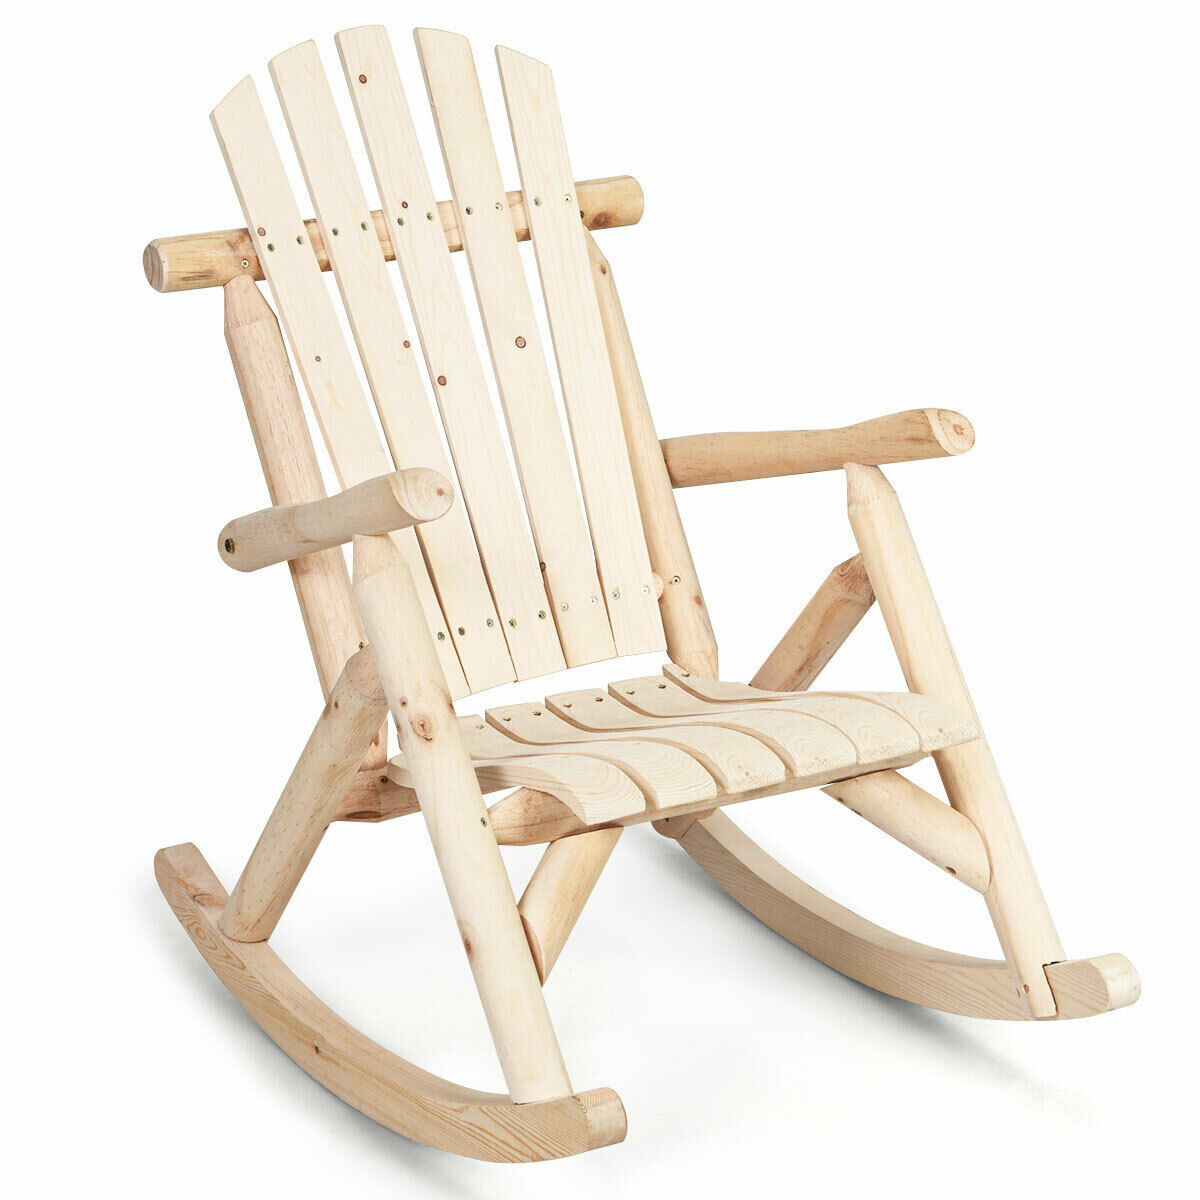 Costway Log Rocking Chair Wood Single Porch Rocker Lounge Patio Deck Furniture Natural - image 1 of 10